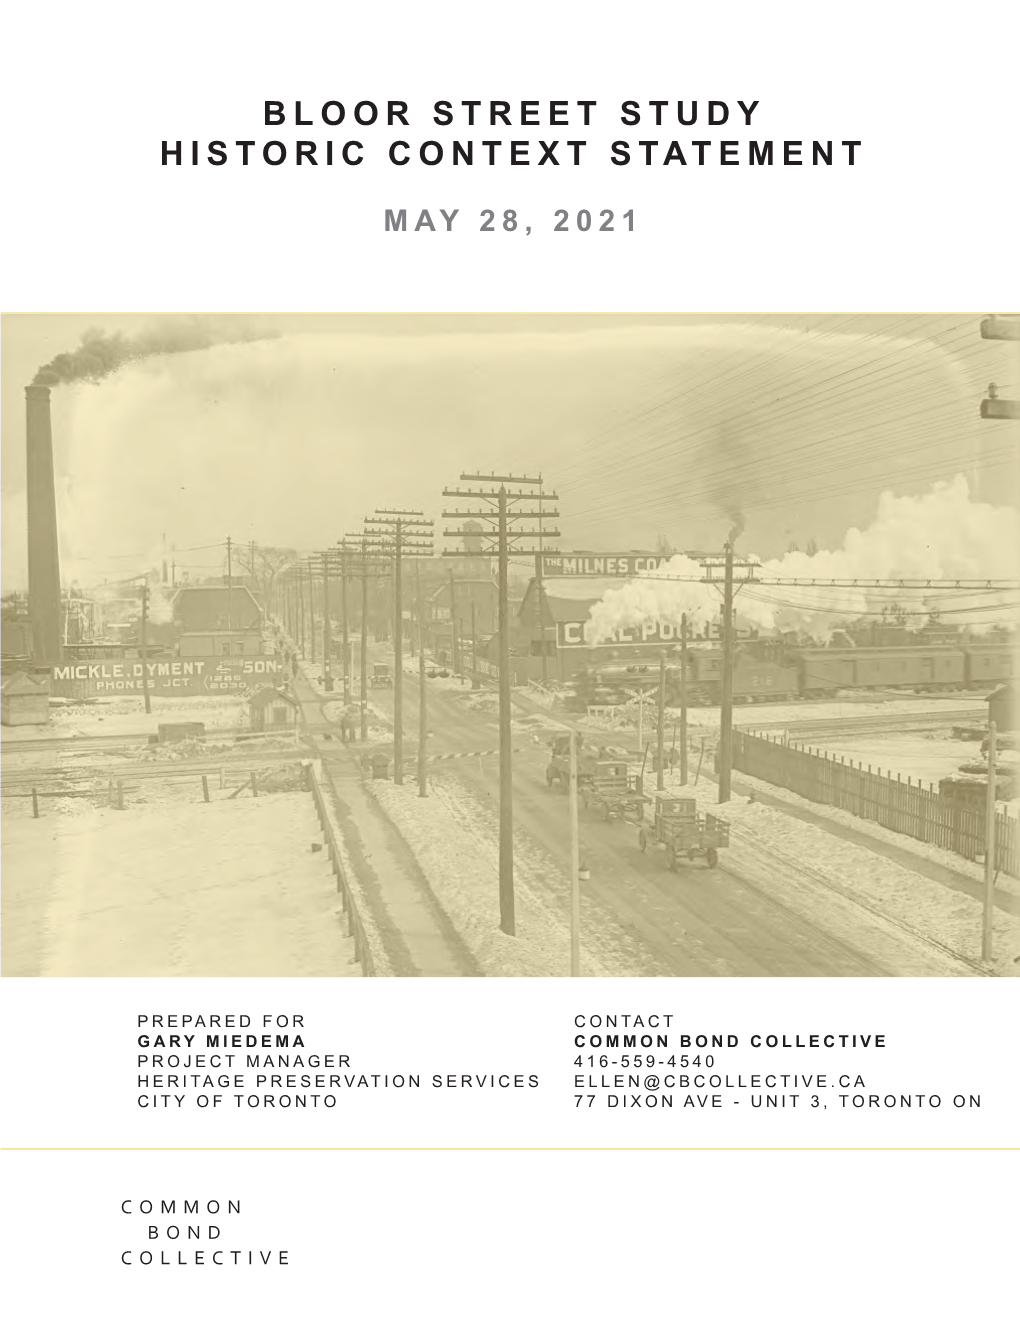 Bloor Street Study Historic Context Statement